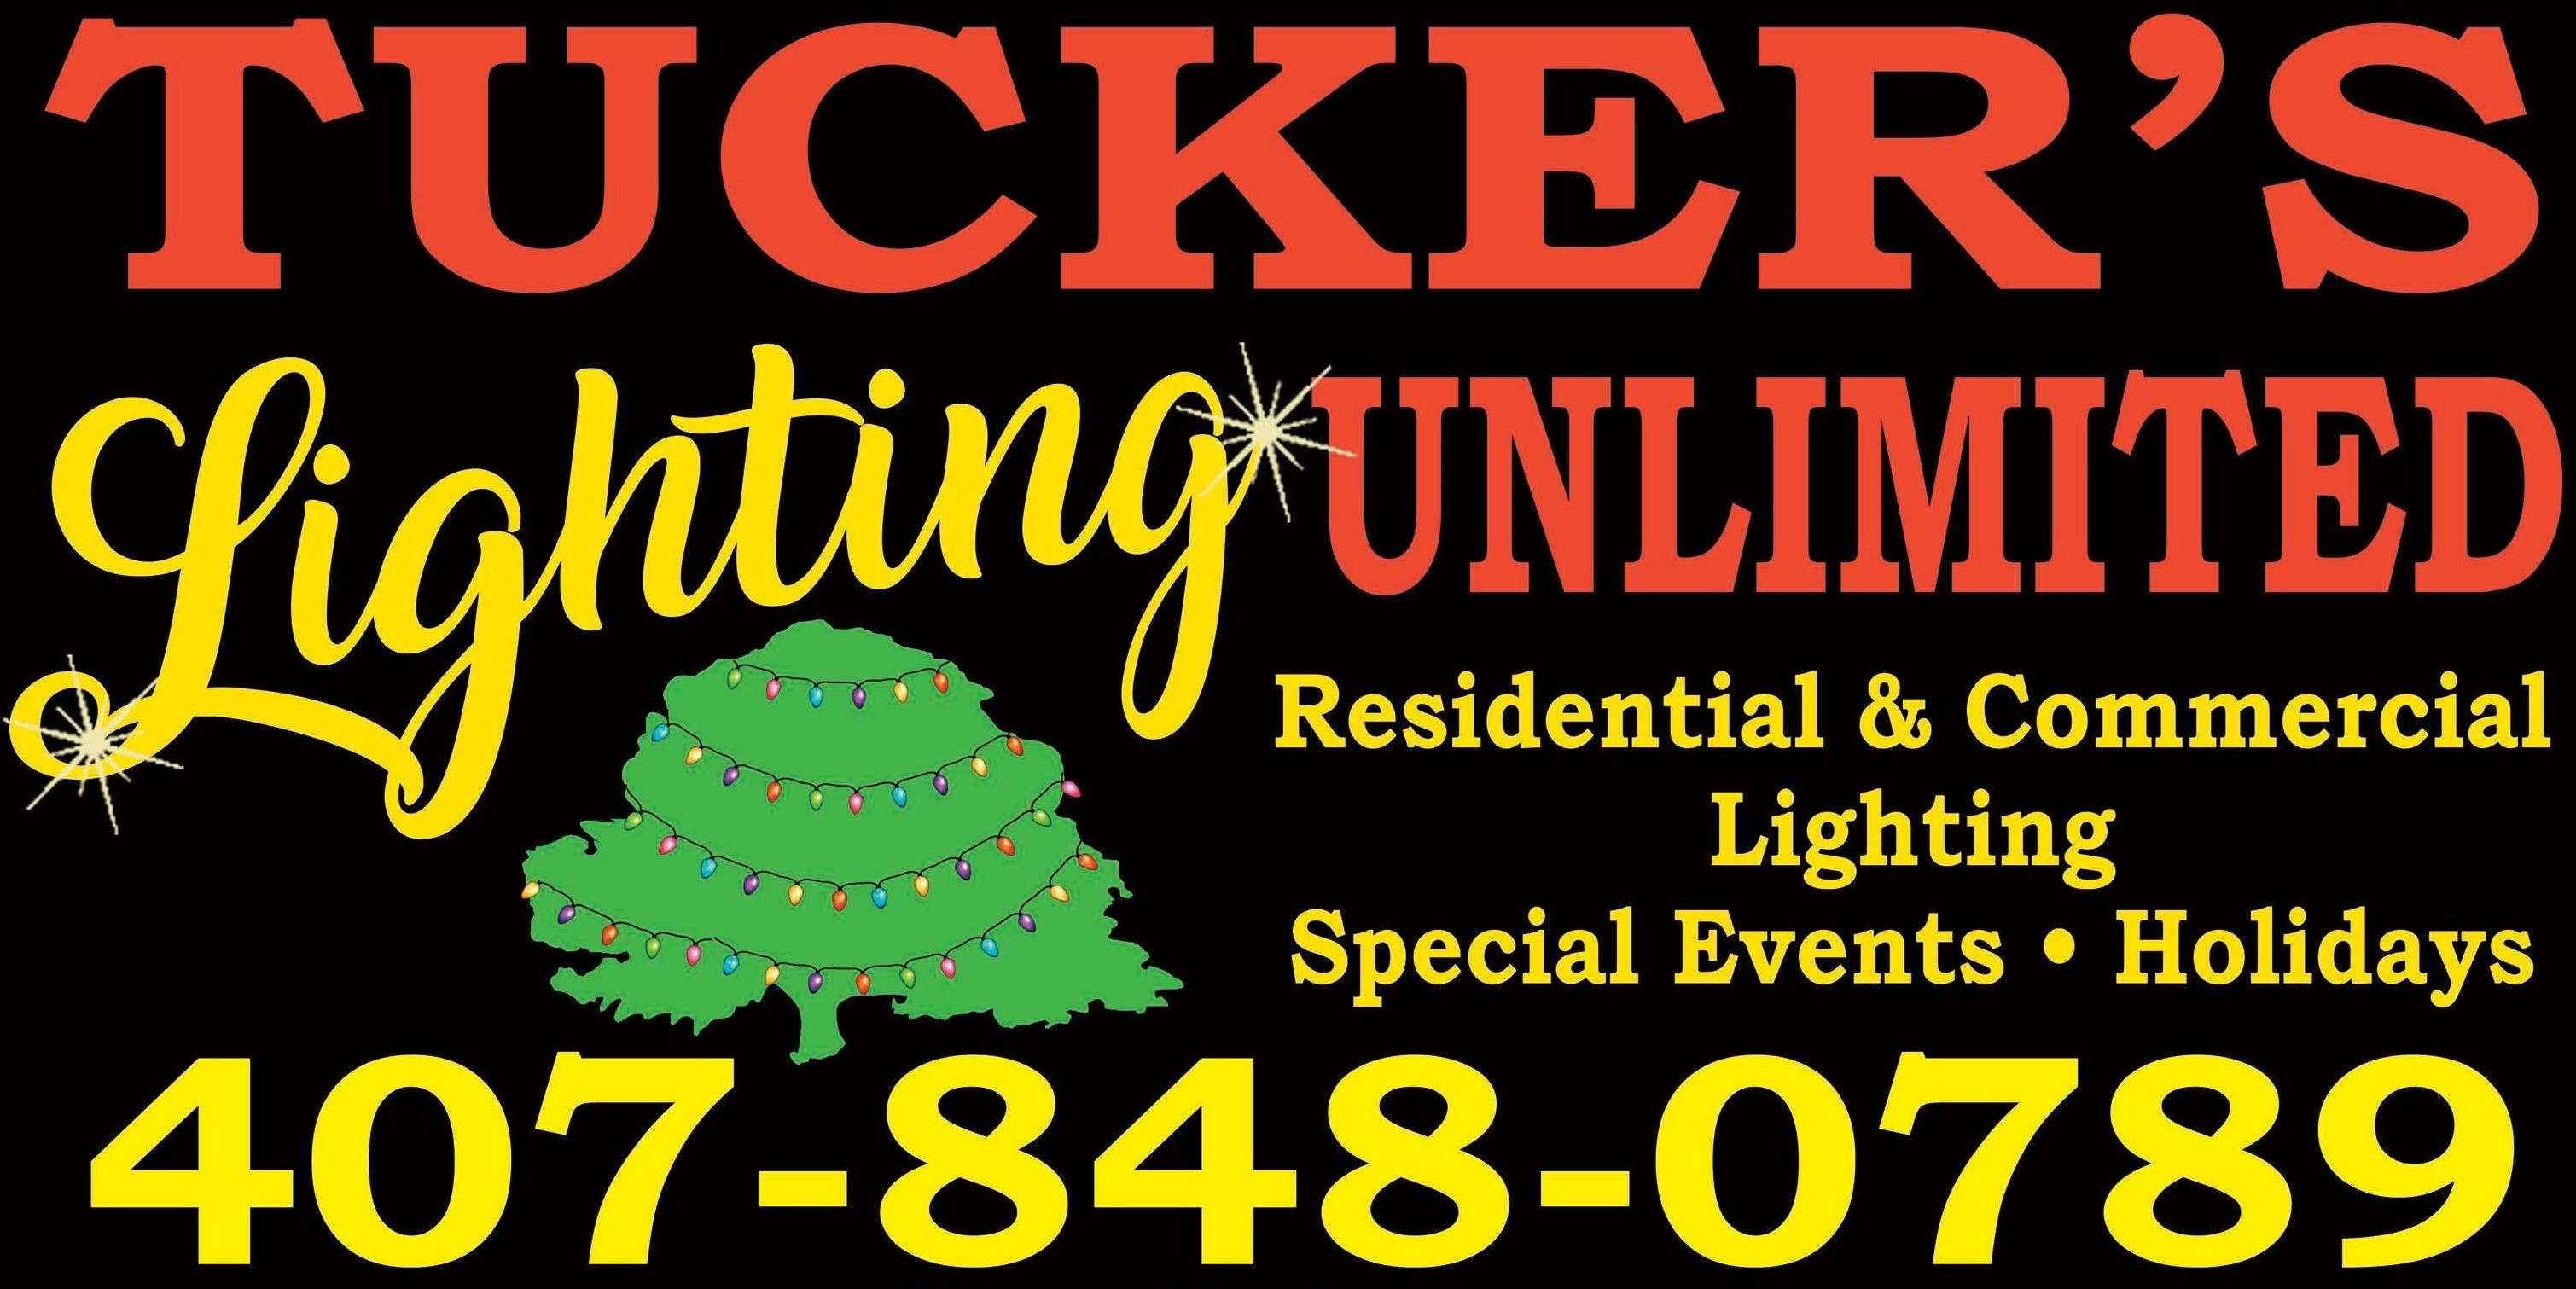 Tucker's Lighting Unlimited Logo